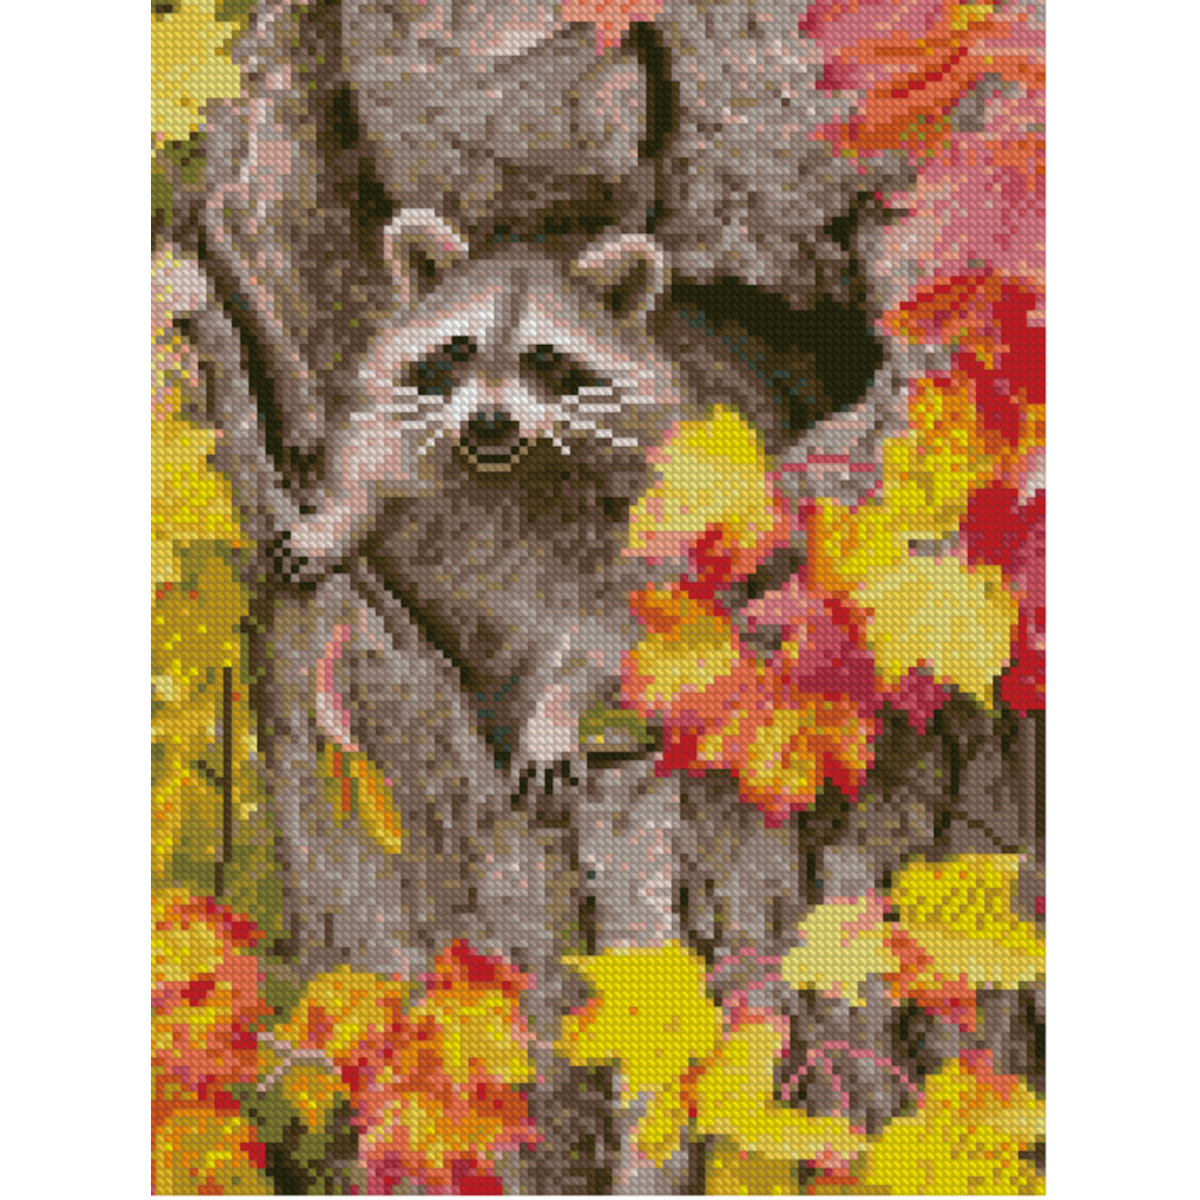 Diamond mosaic Premium HX182 "Raccoon in autumn", size 30x40 cm